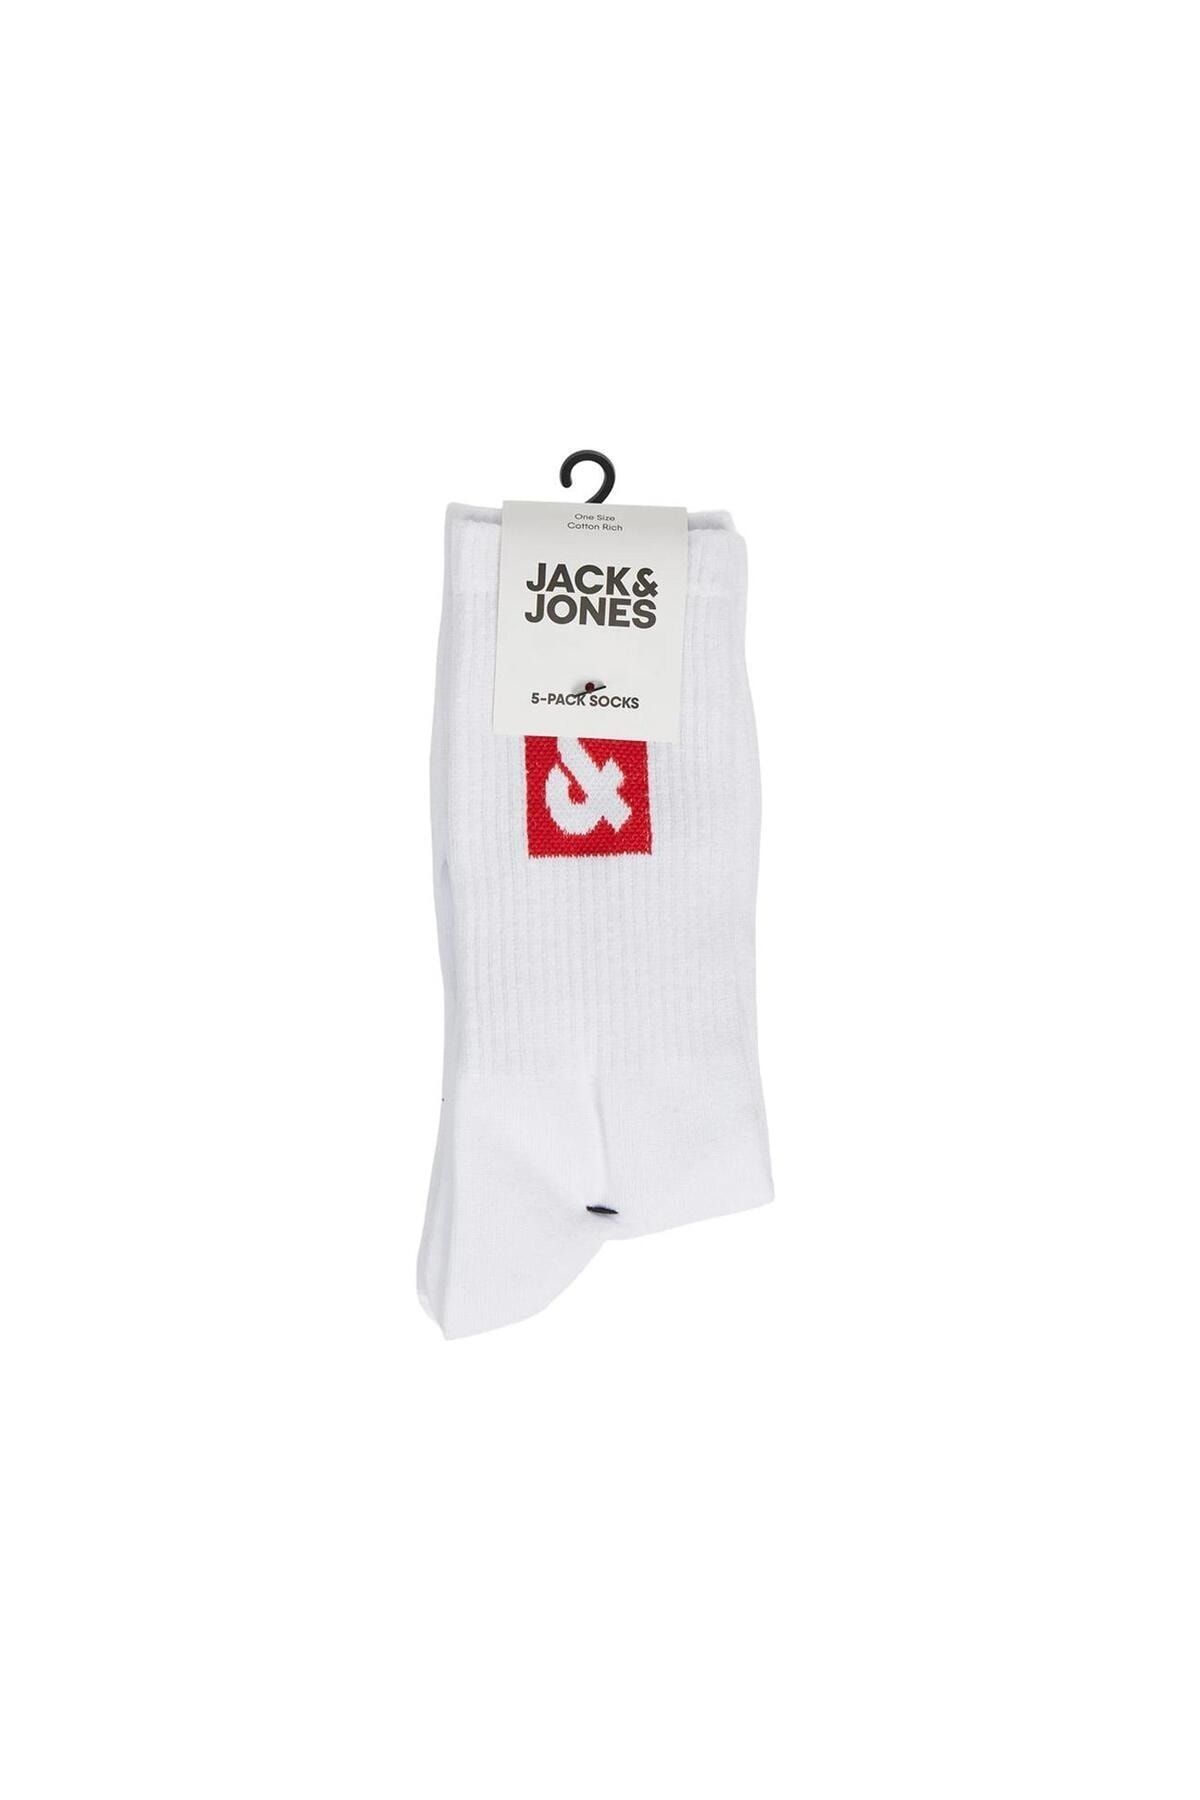 Jack & Jones 12241119 Jacdan Logo Tennis Socks 5 Pack Beyaz &